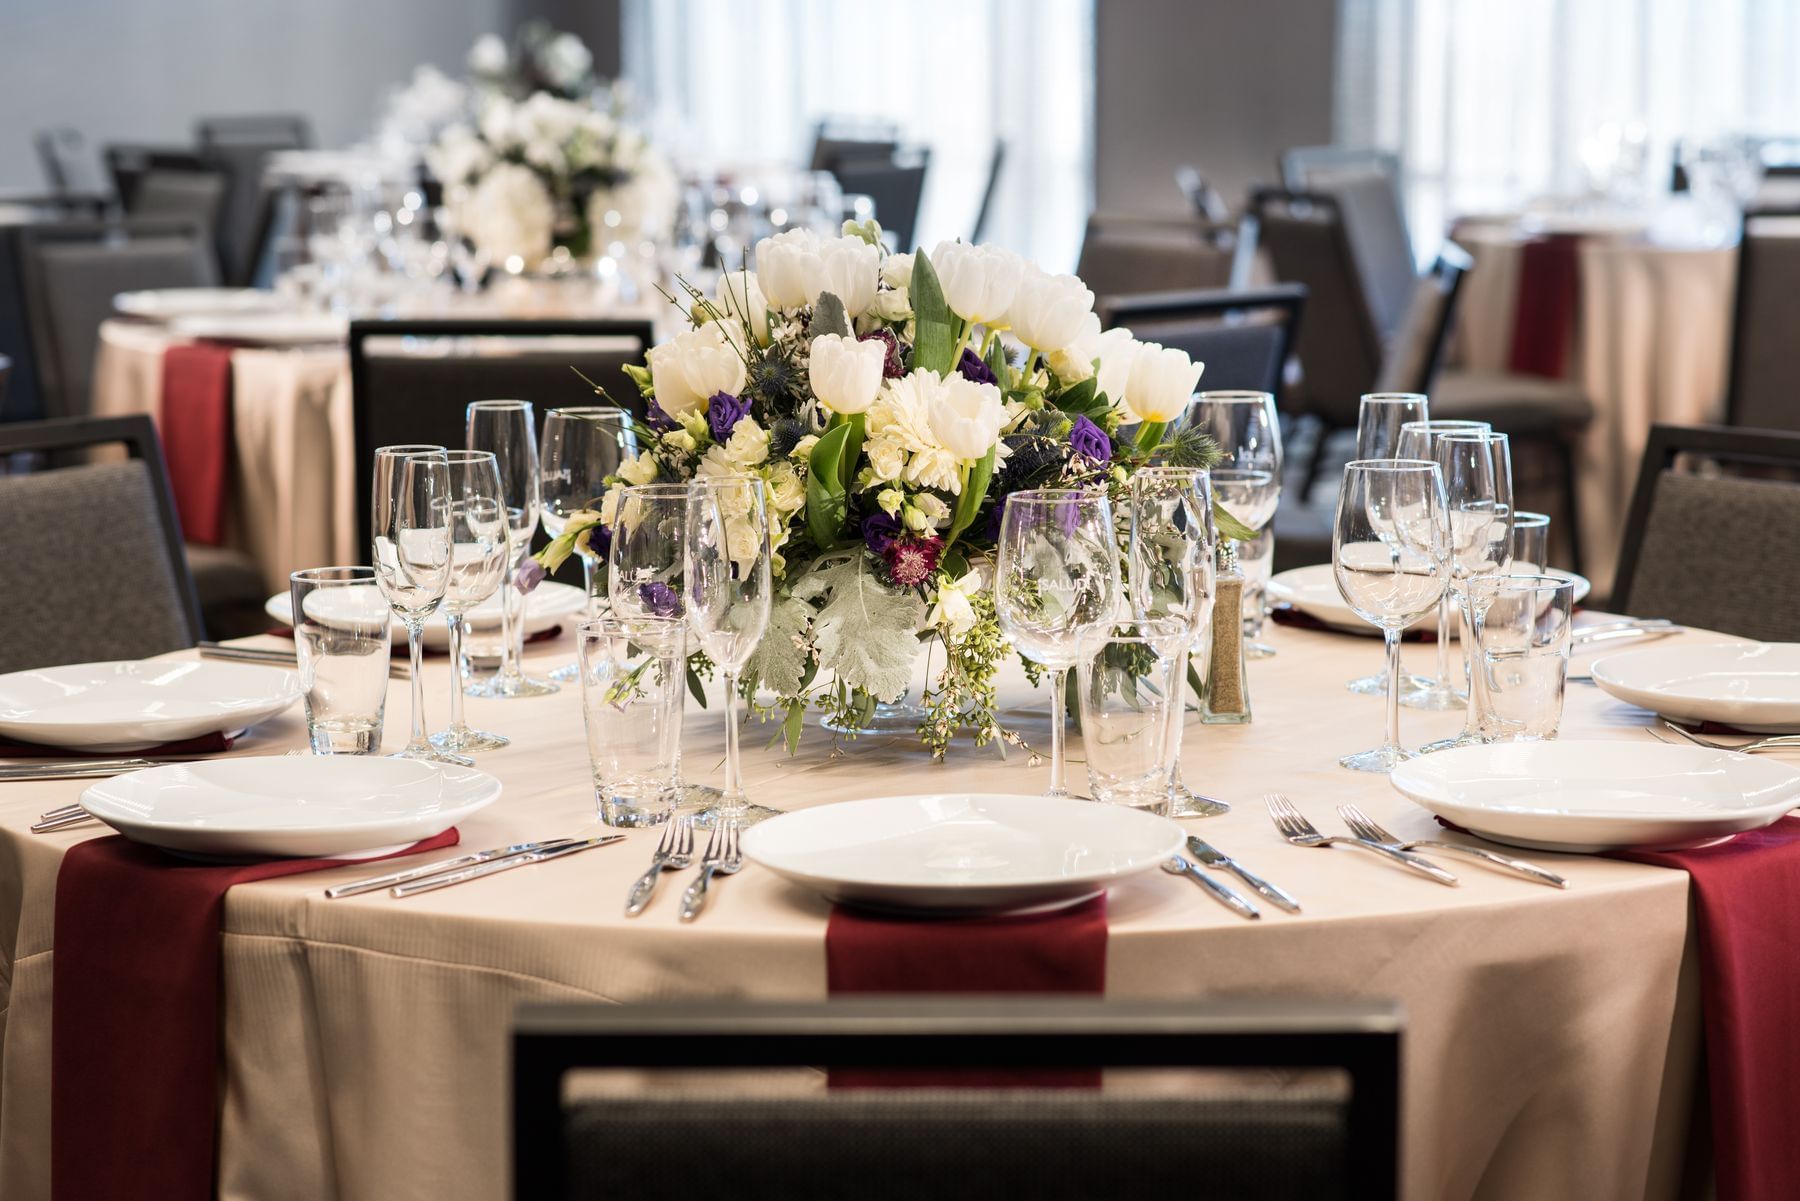 Banquet rounds set with floral center pieces